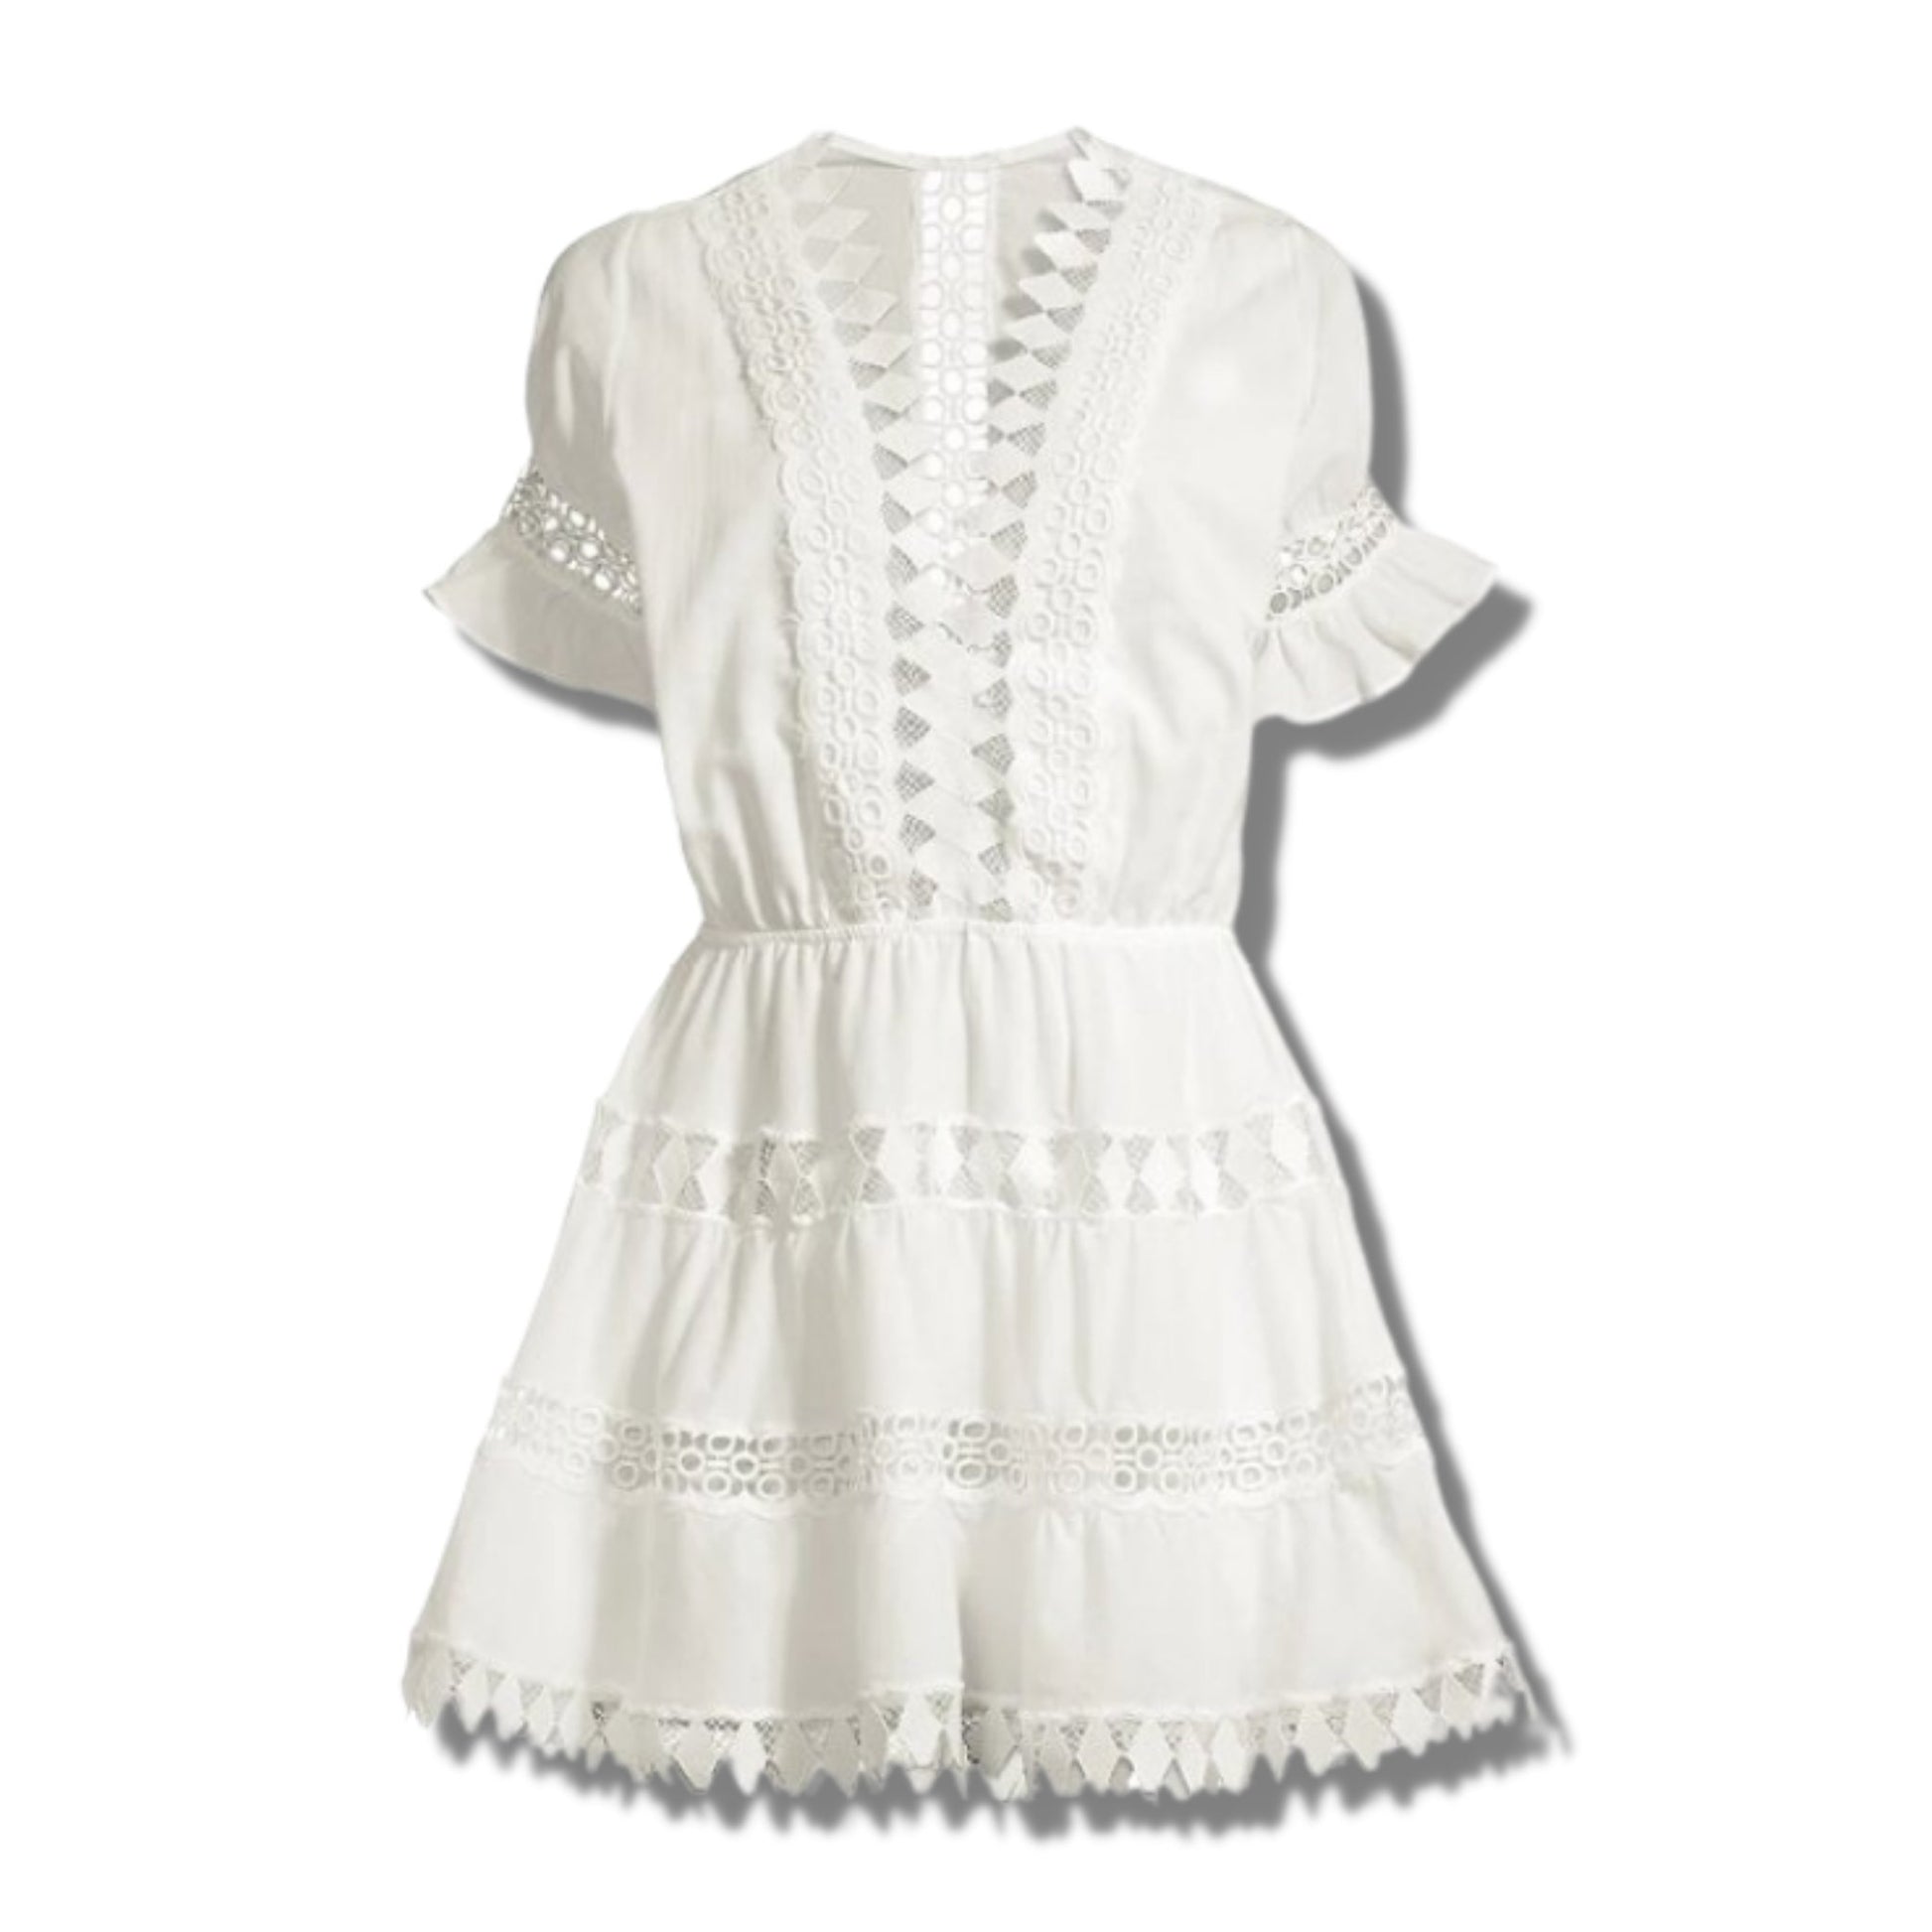 Little Peixoto White Ora Dress - a Spirit Animal - Dress $90-$105 cover-ups dress